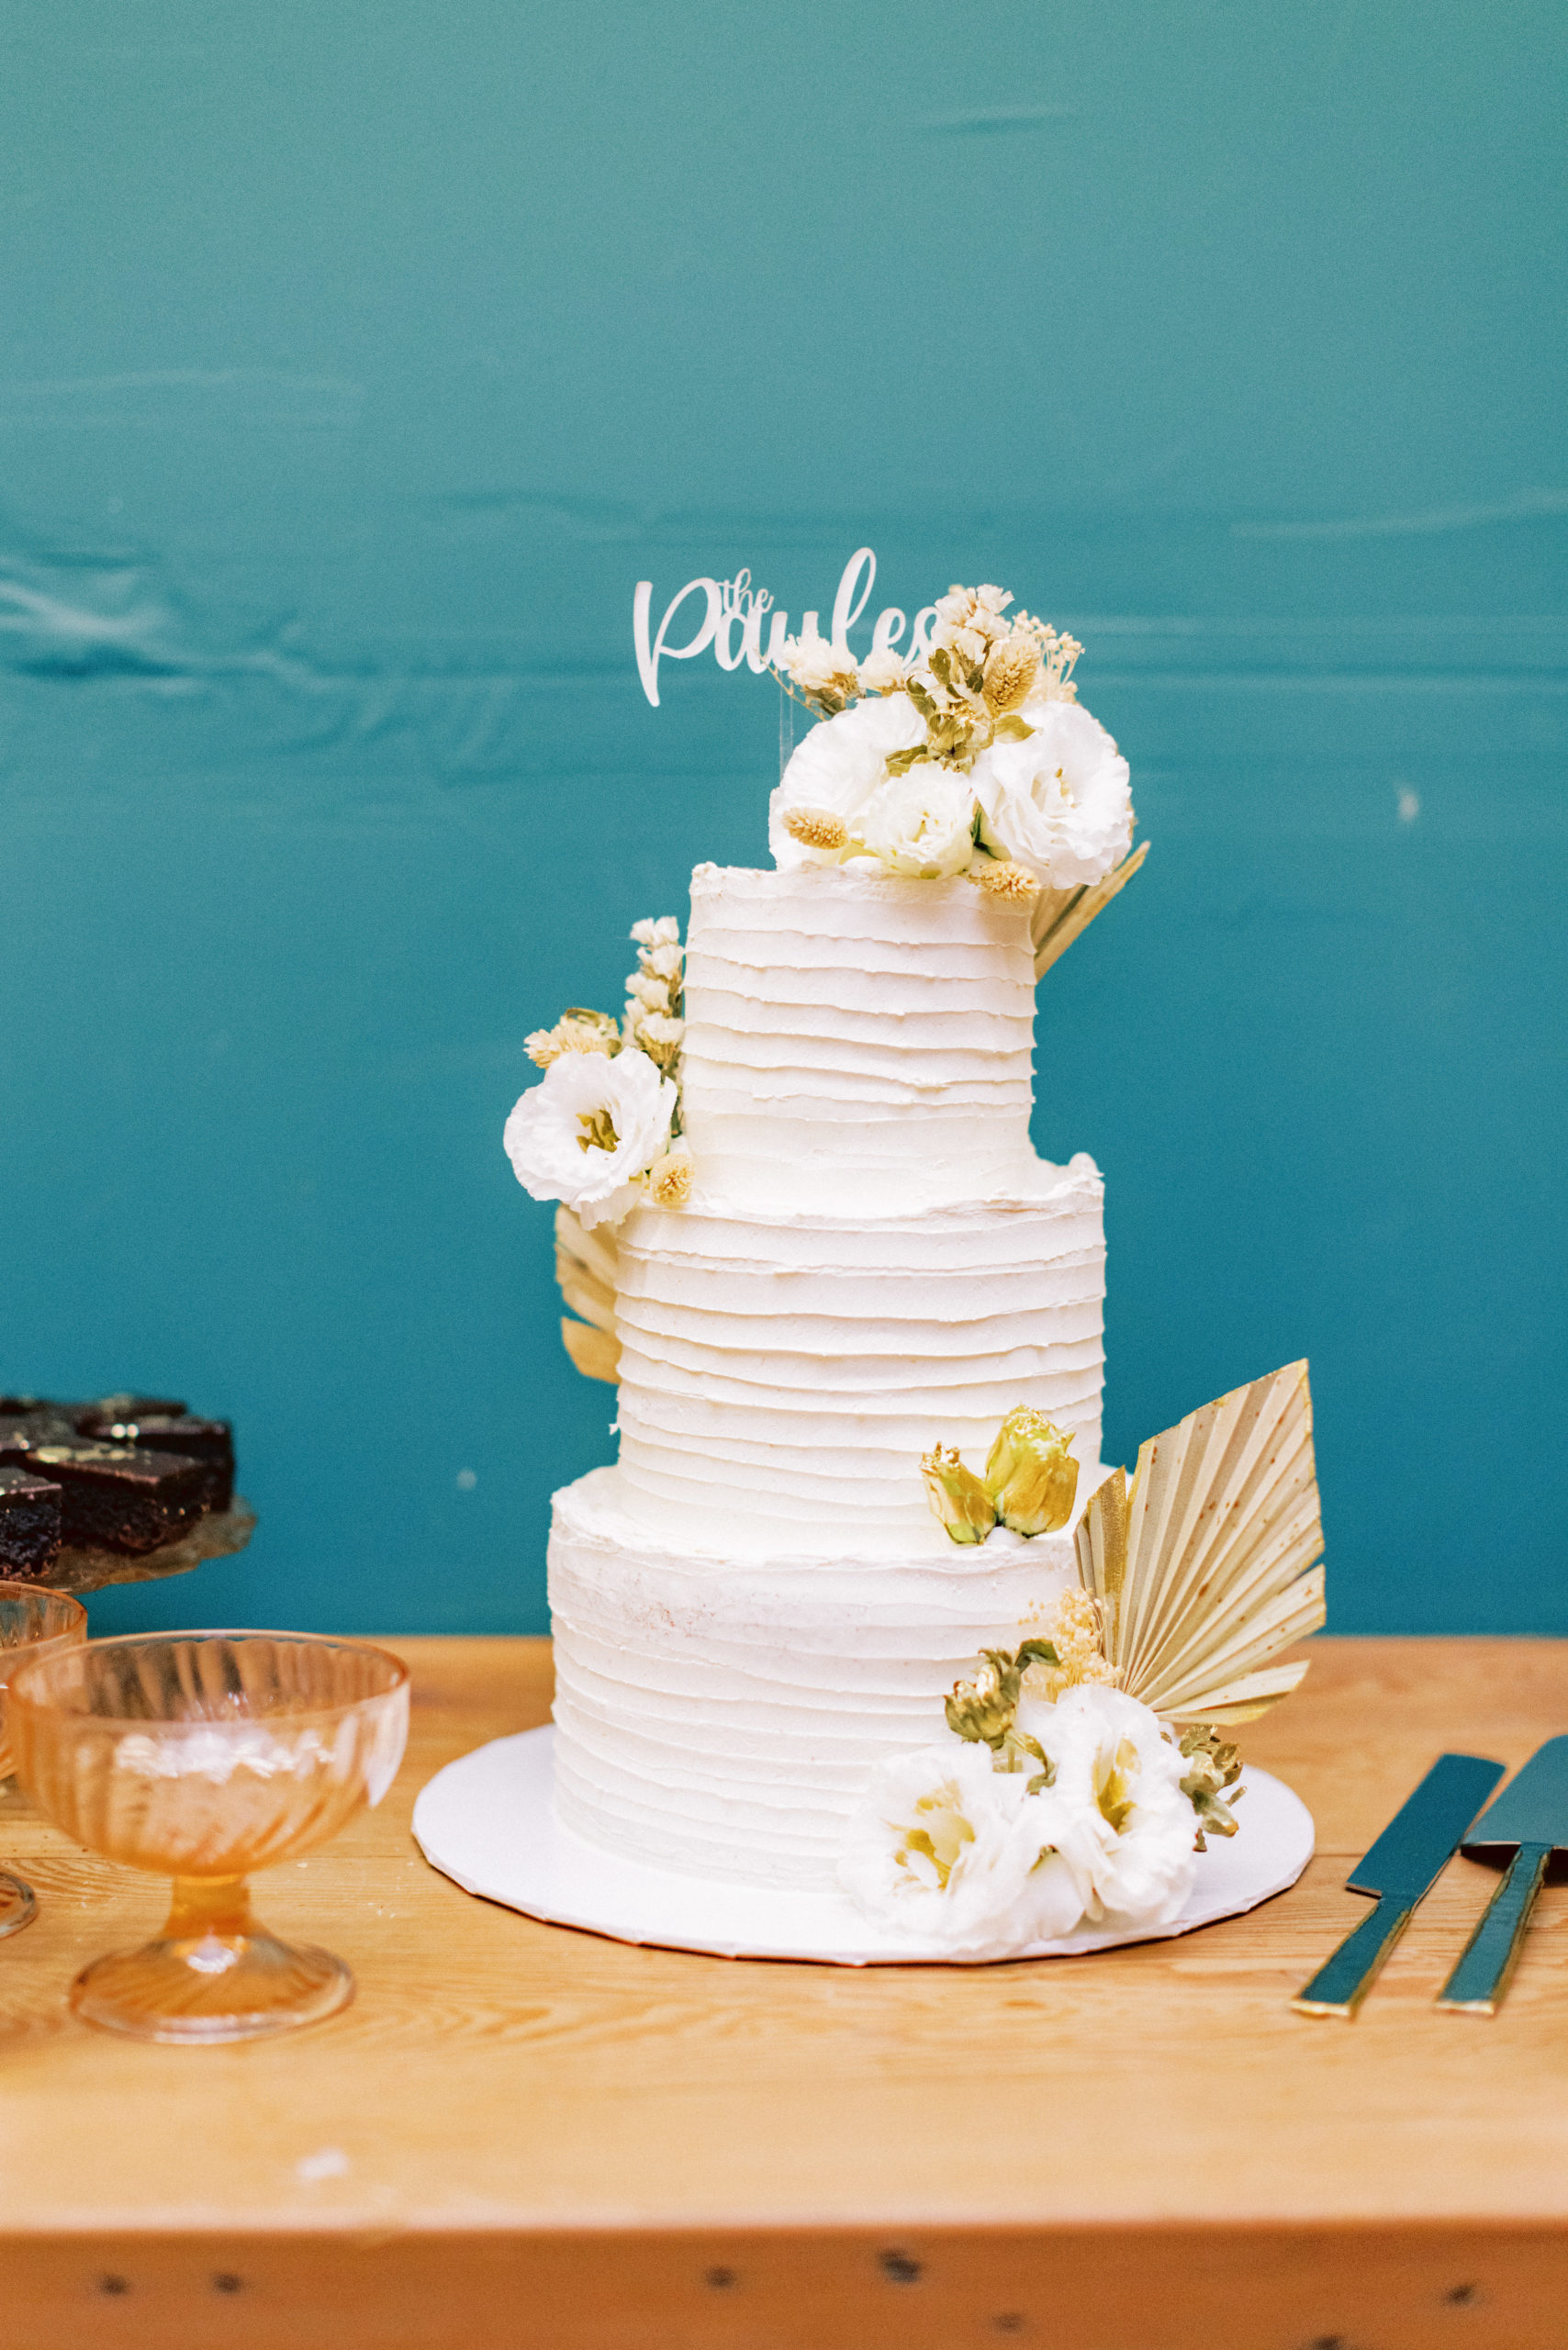 three tier white wedding cake with flowers